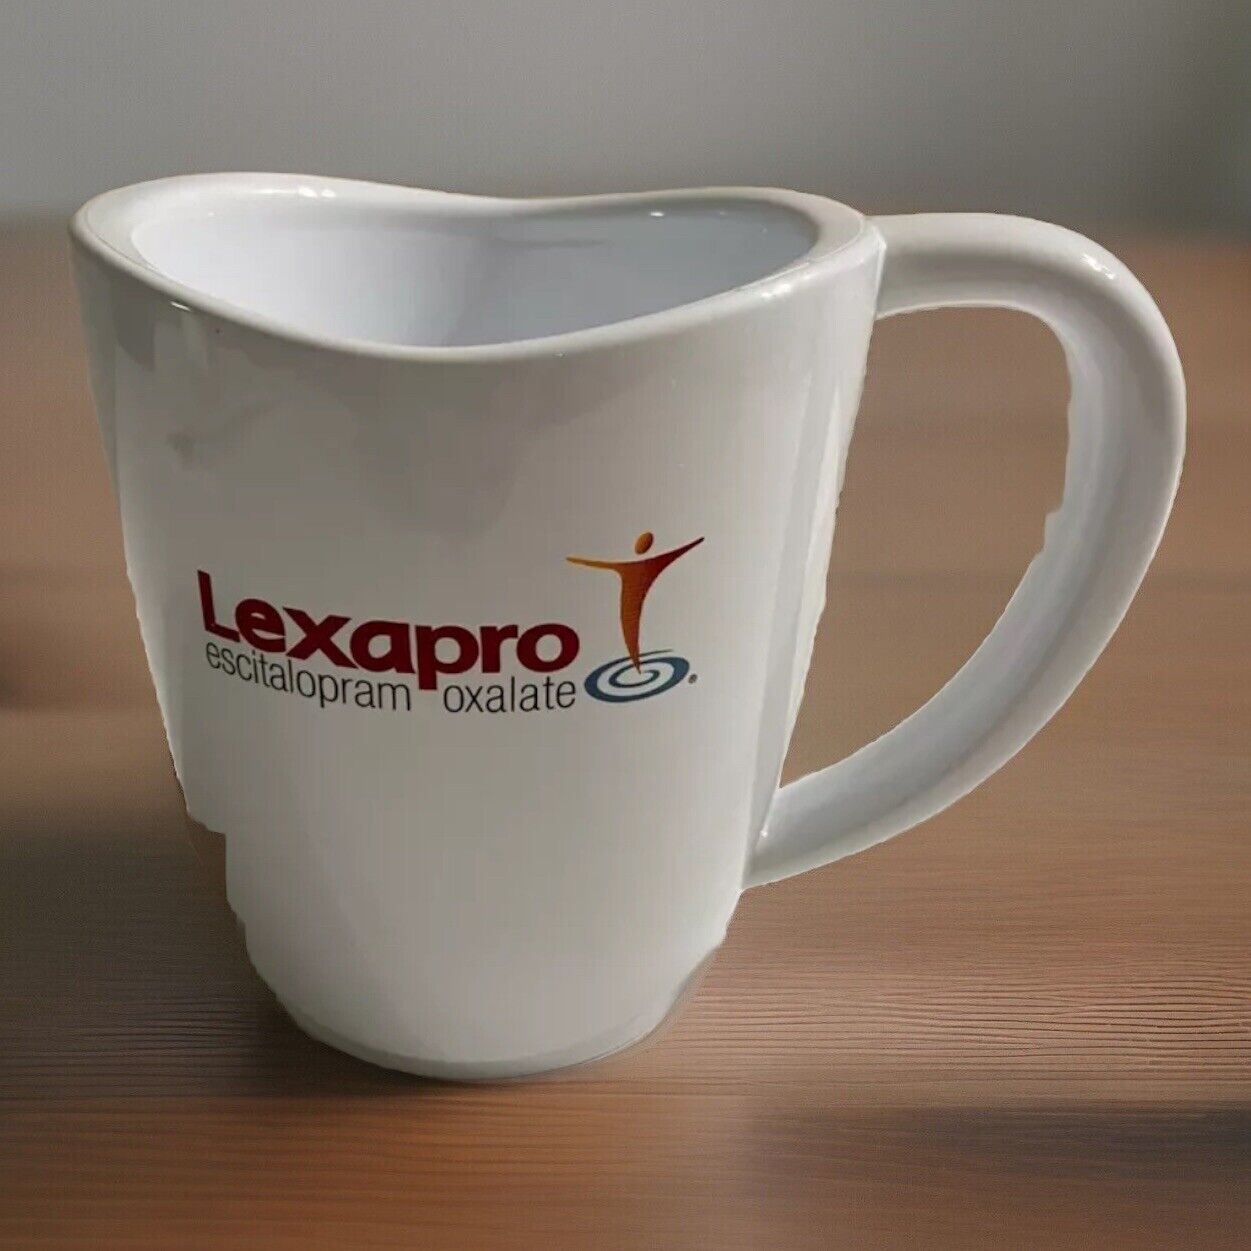 Lexapro Melamine Coffee Mug Promo Pharmaceutical RX Drug Advertisement Cup